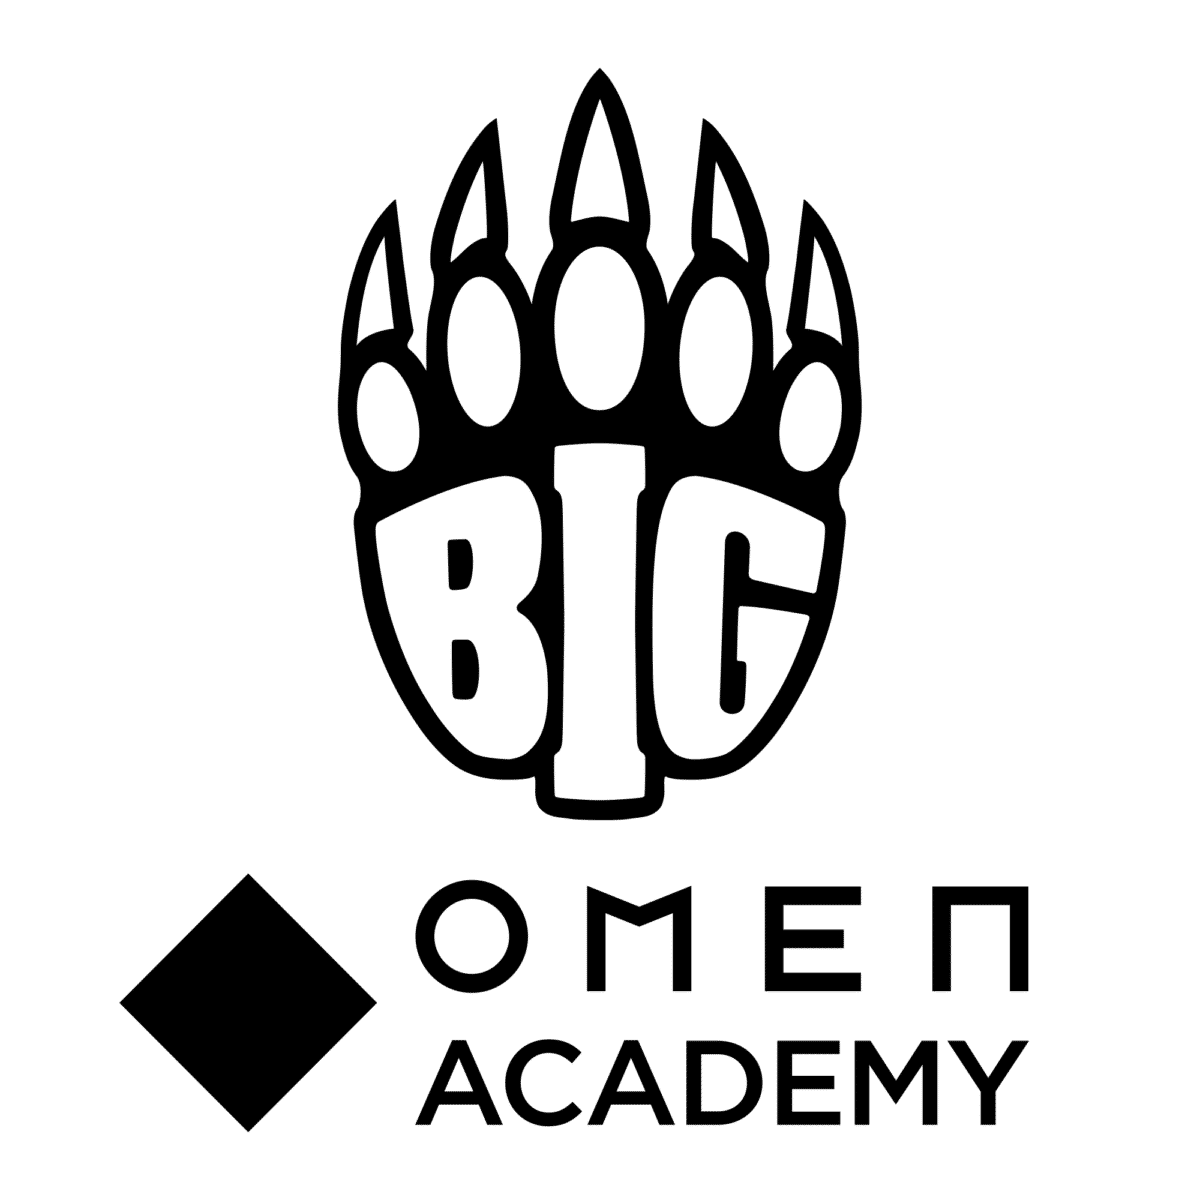 big academy logo